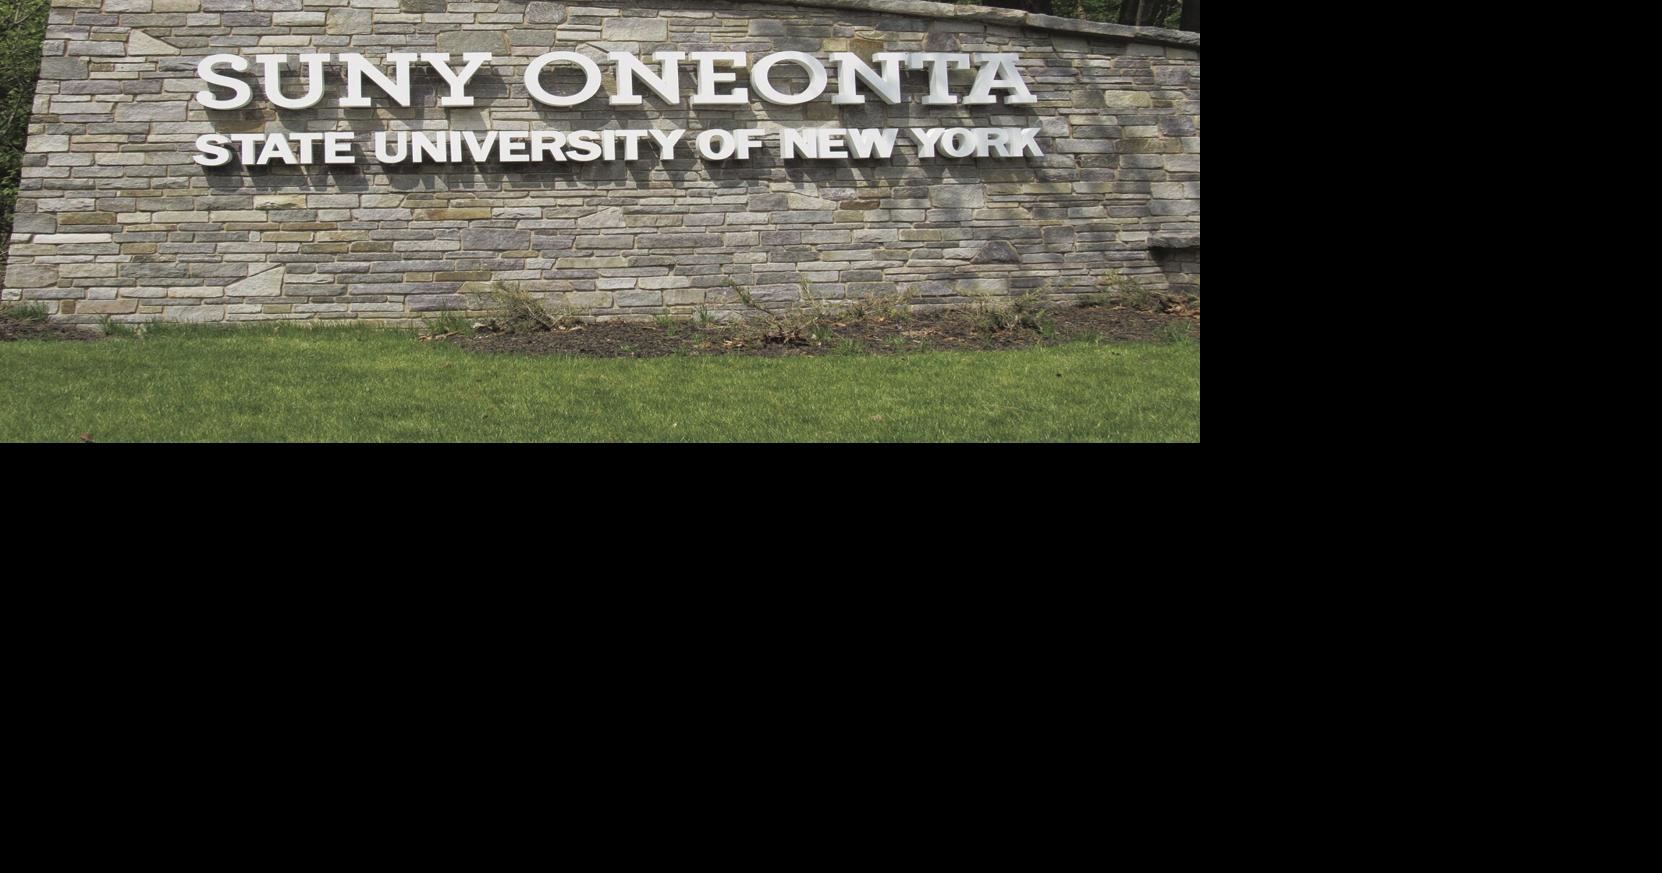 SUNY Oneonta graduation set for Saturday Local News